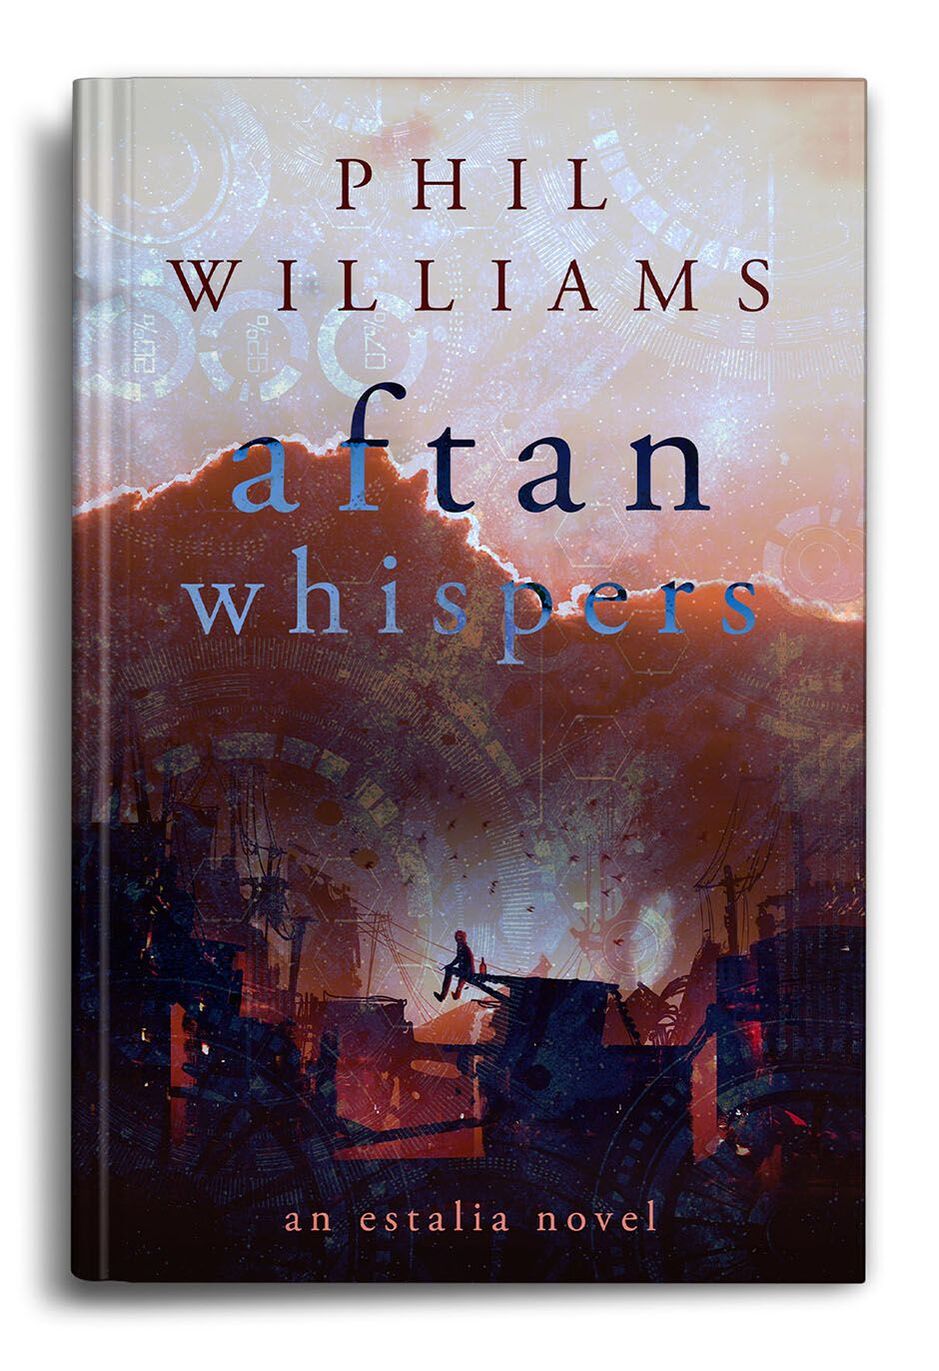 Aftan Whispers - Phil Willians